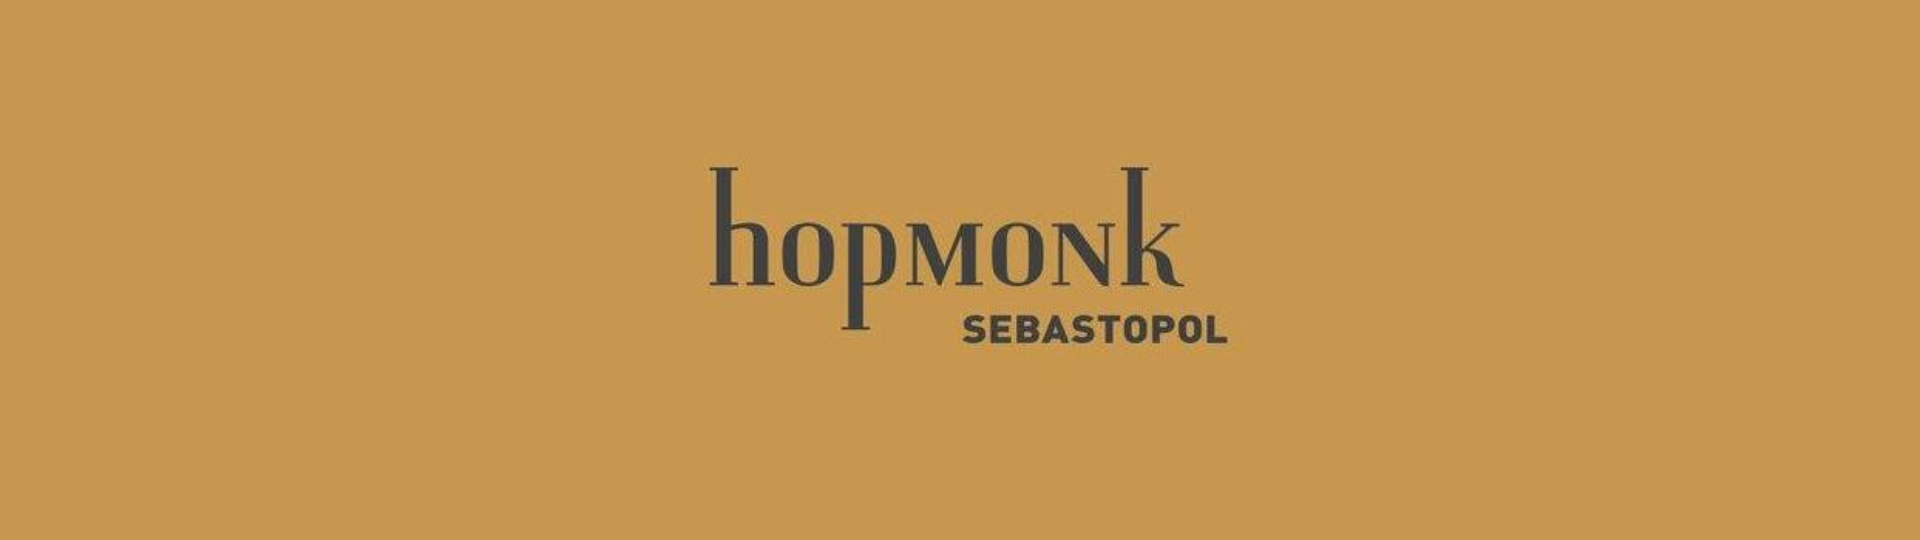 Hopmonk tavern